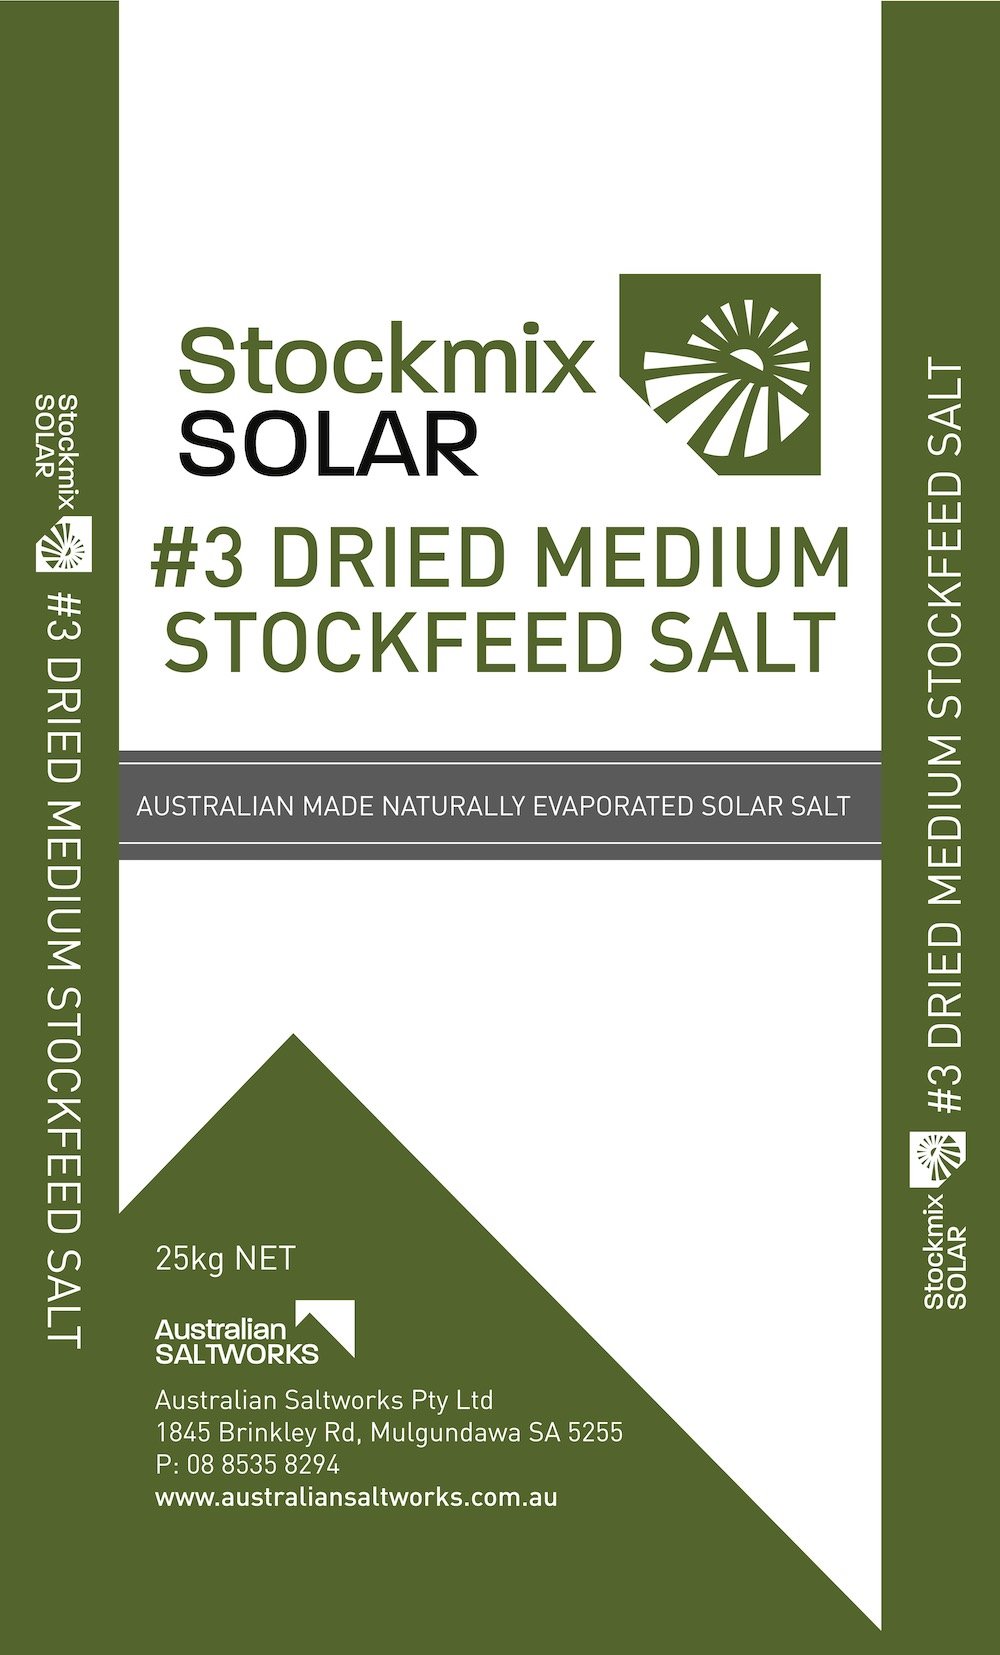 Stockmix Solar 3 Dried Medium Stockfeed Salt.jpg